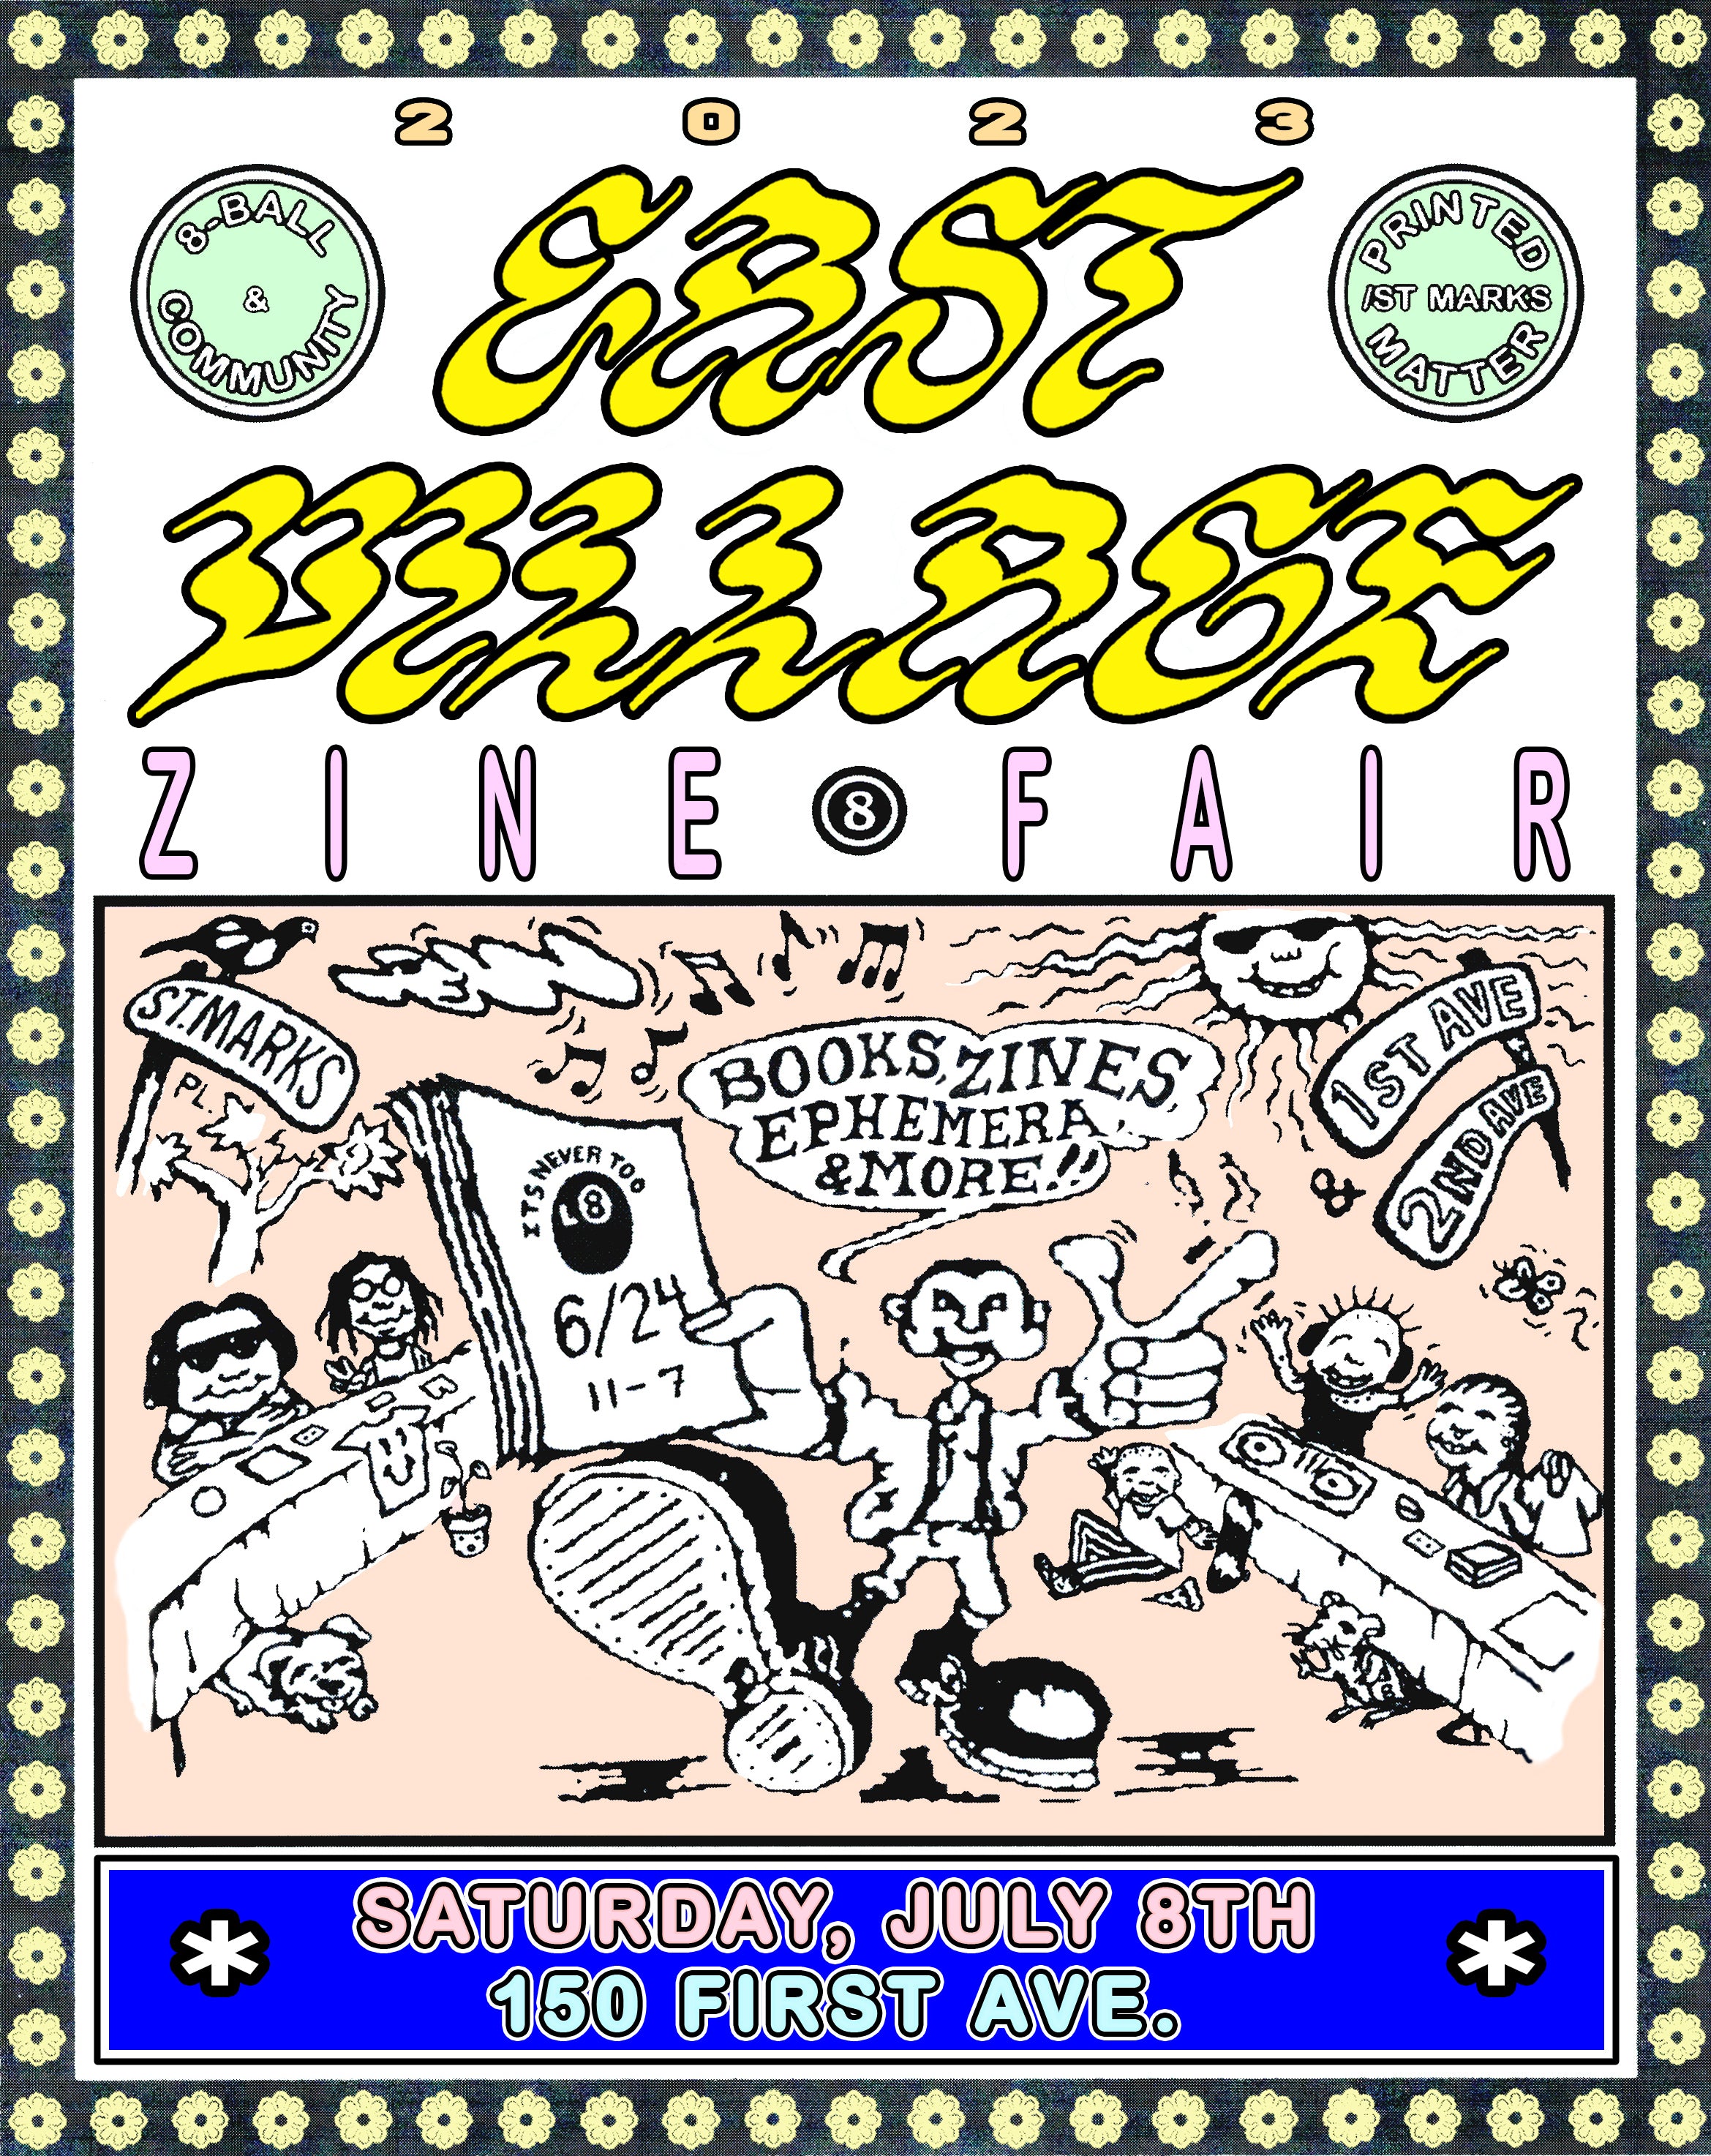 East Village Printed Matter Zine Fair